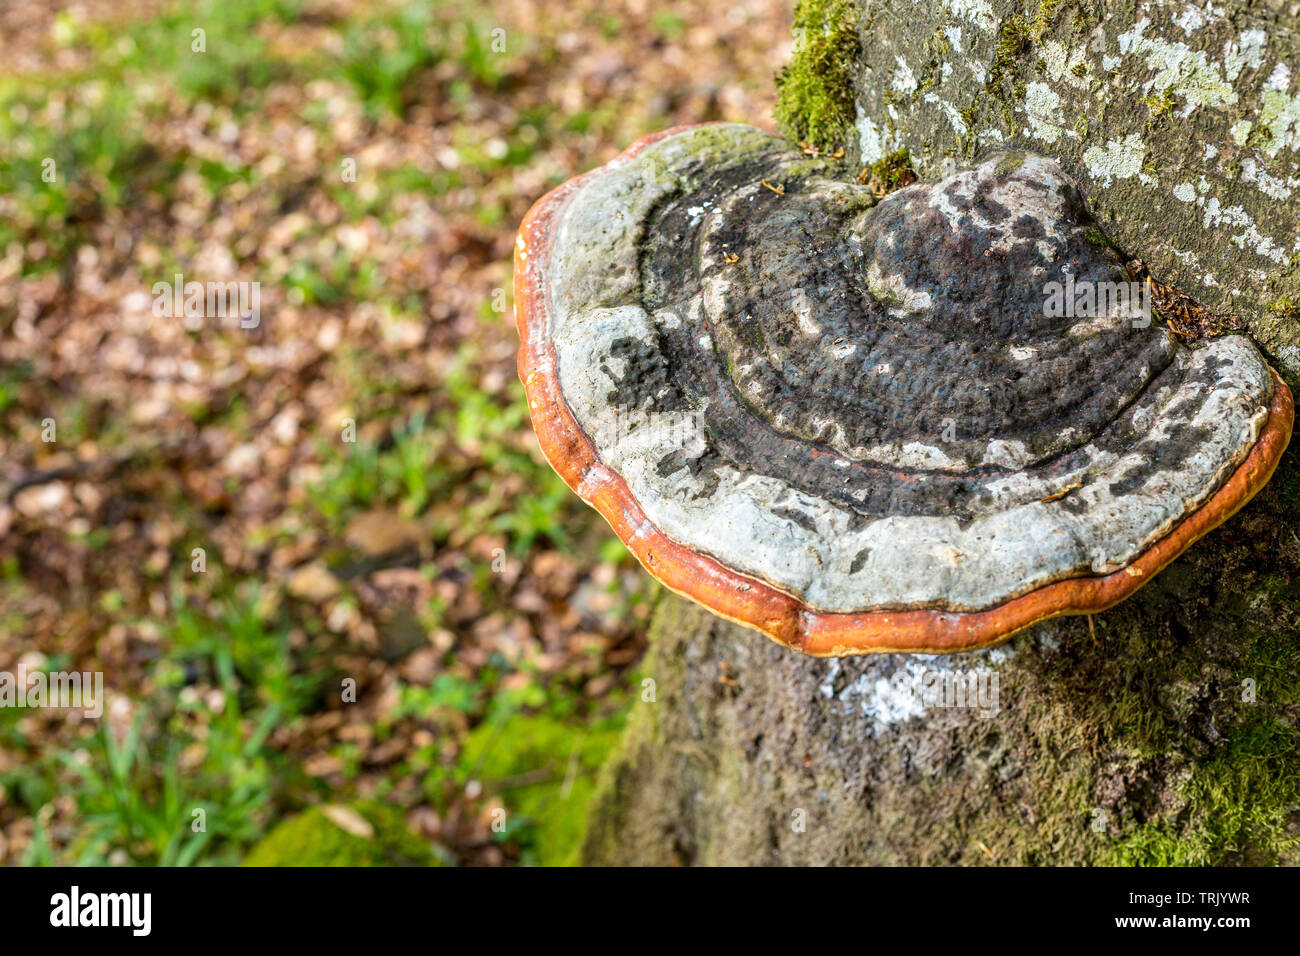 Polypore fungus mushroom growing on beech tree trunk Stock Photo